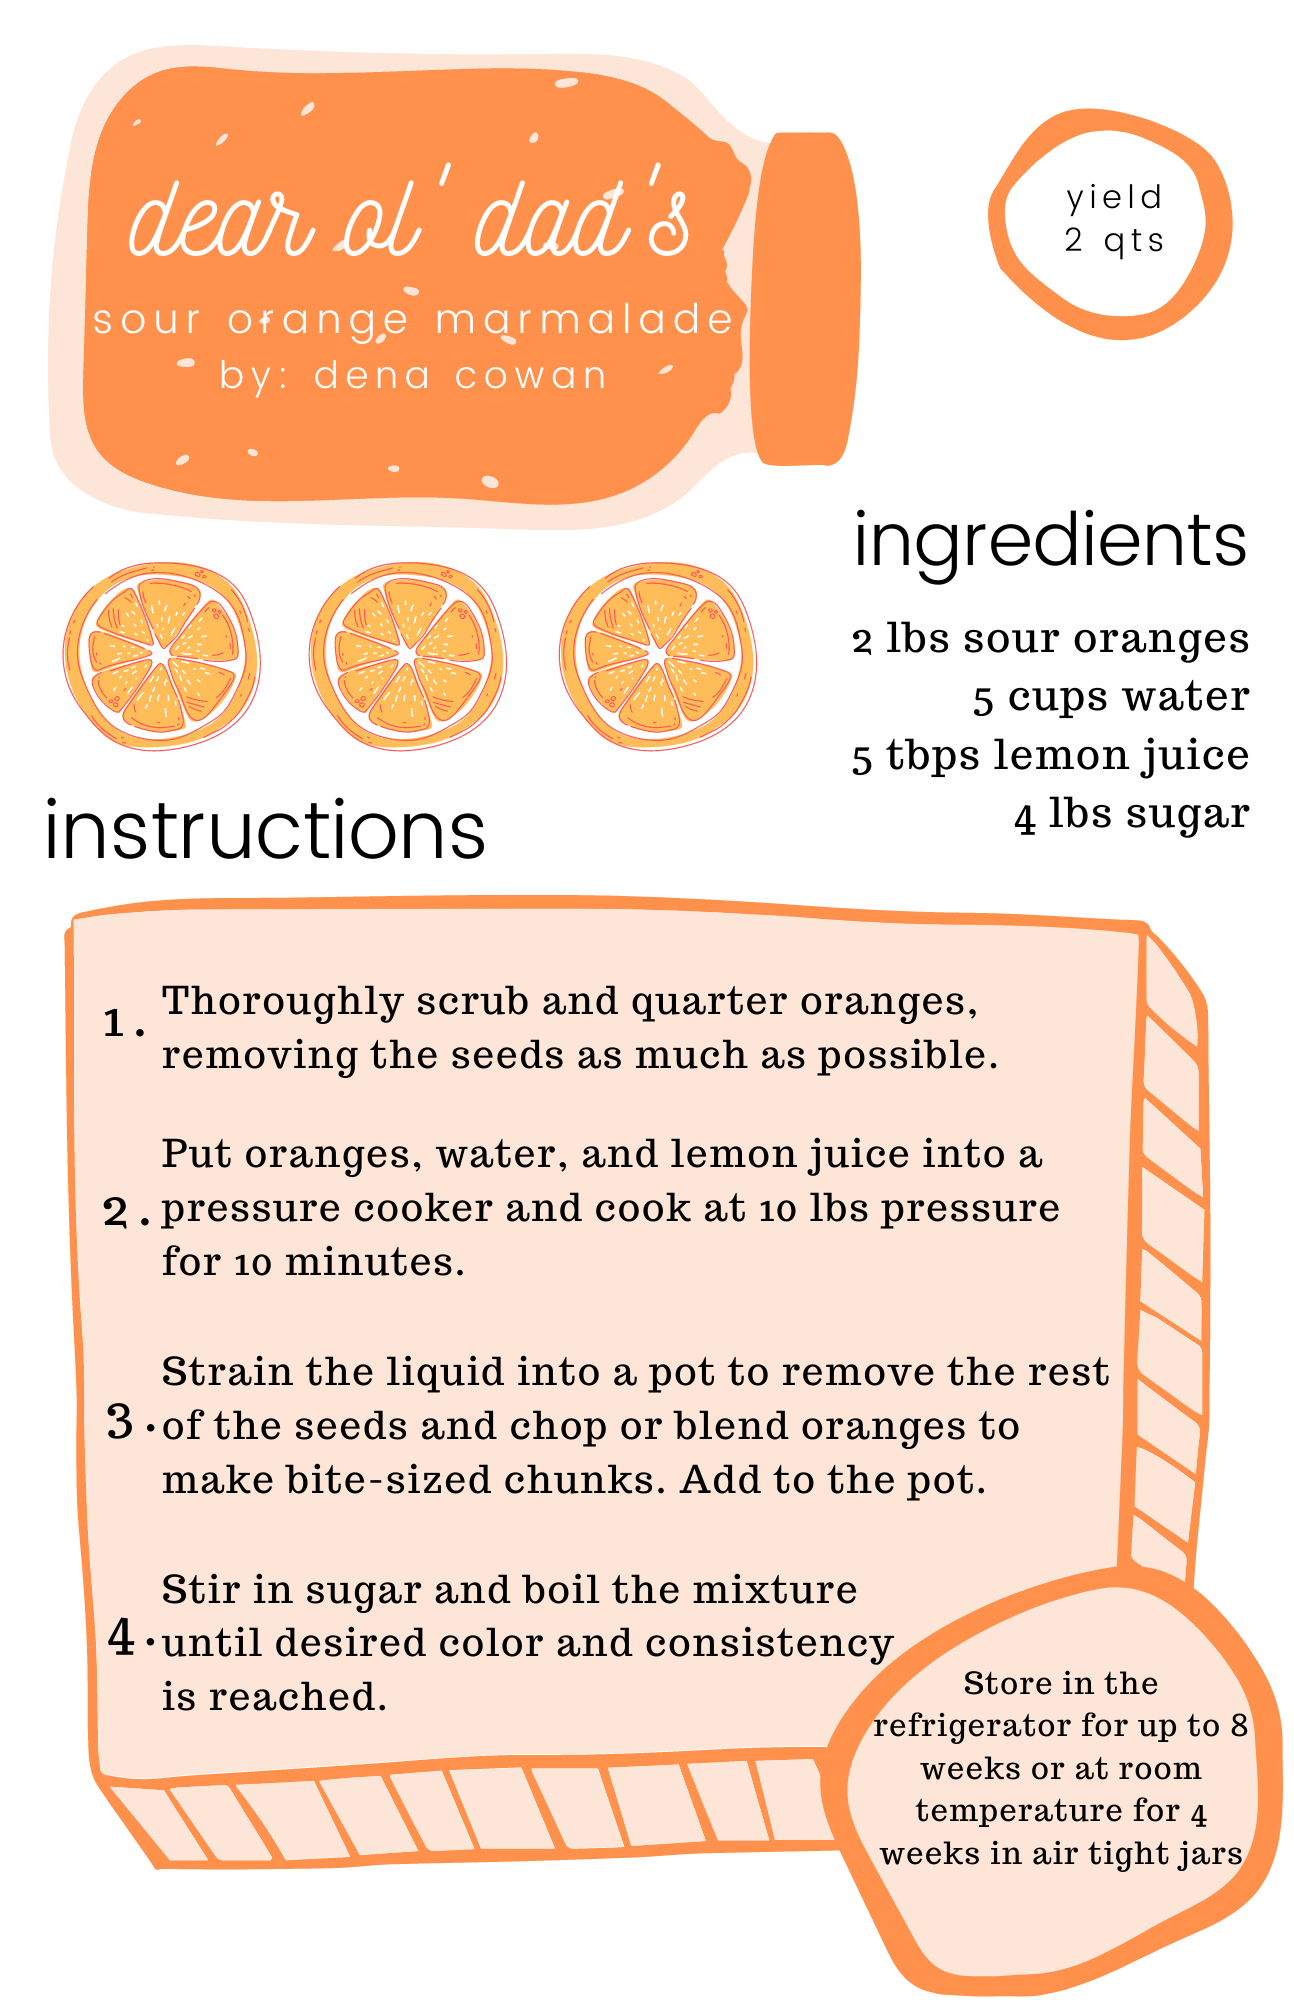 Dear ol’ Dad’s Sour Orange Marmalade recipe.